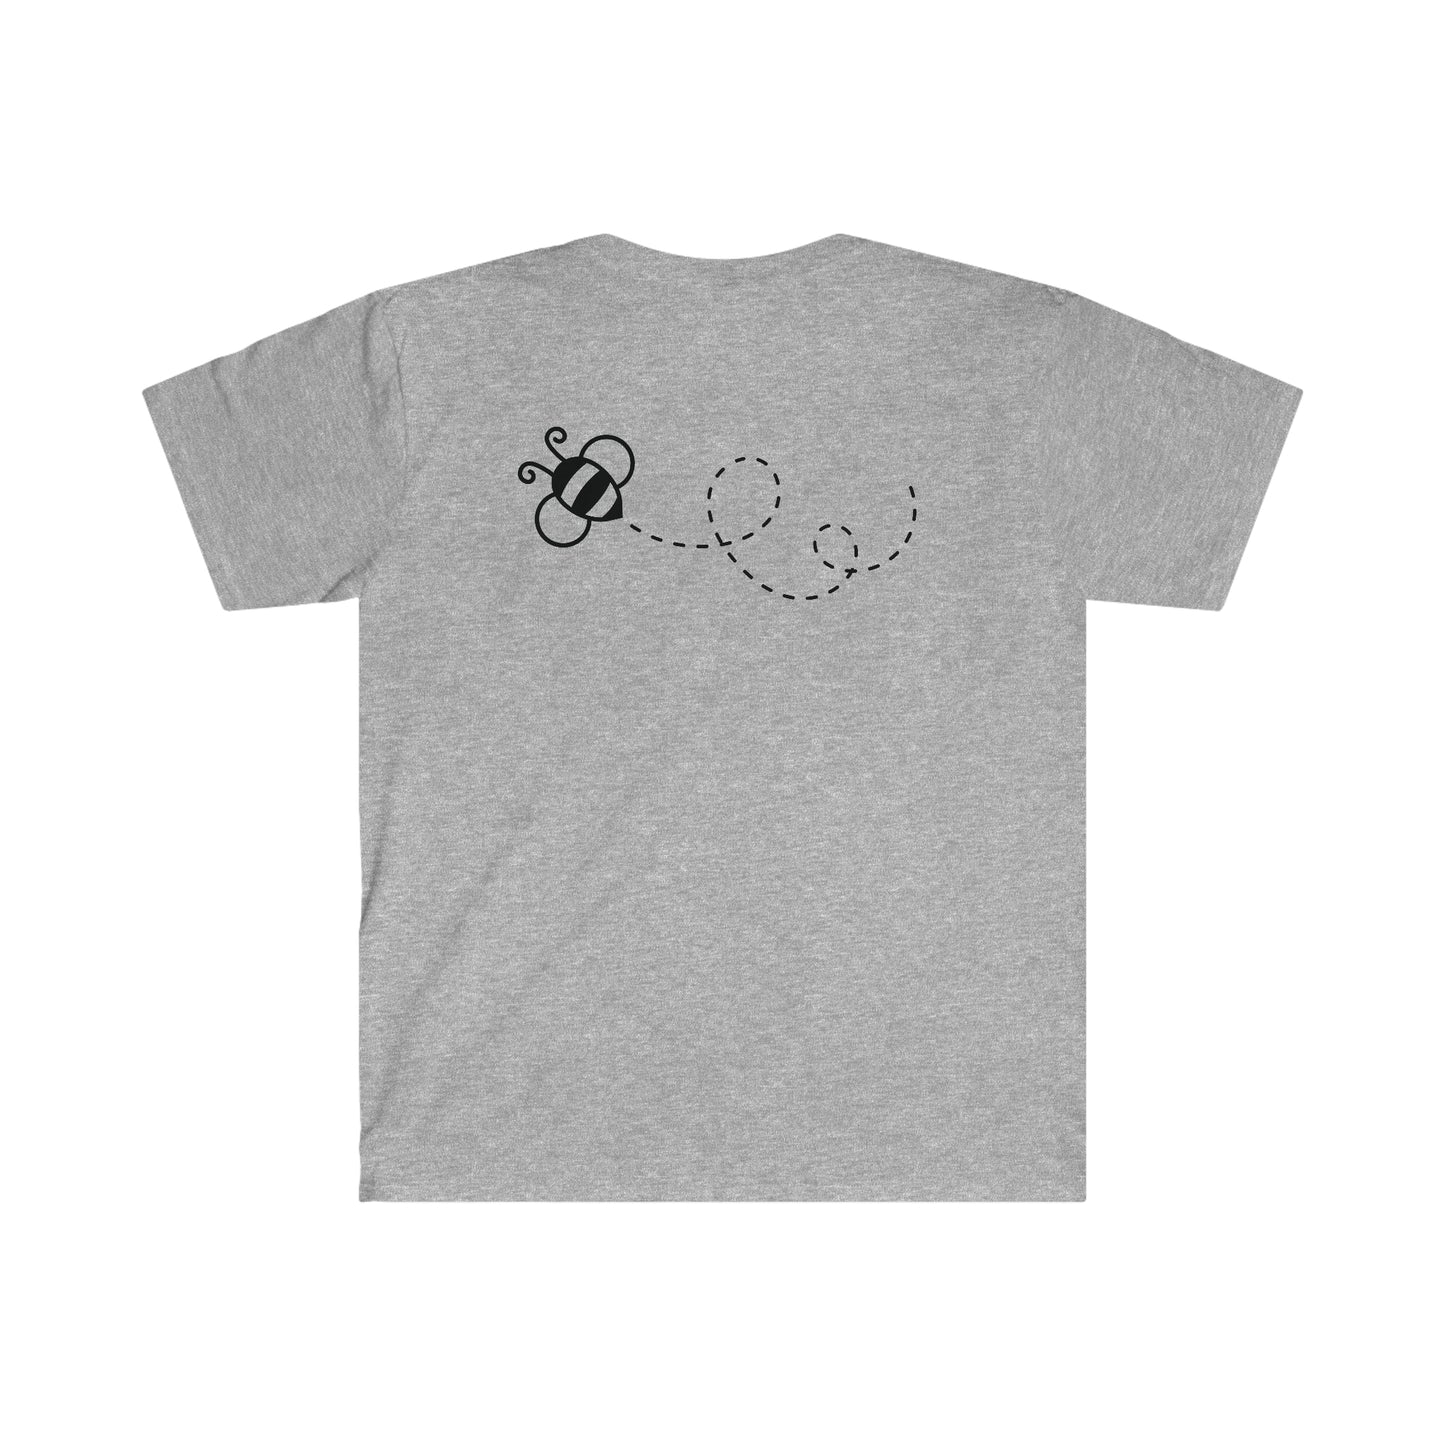 I'M A KEEPER  Unisex Softstyle T-Shirt